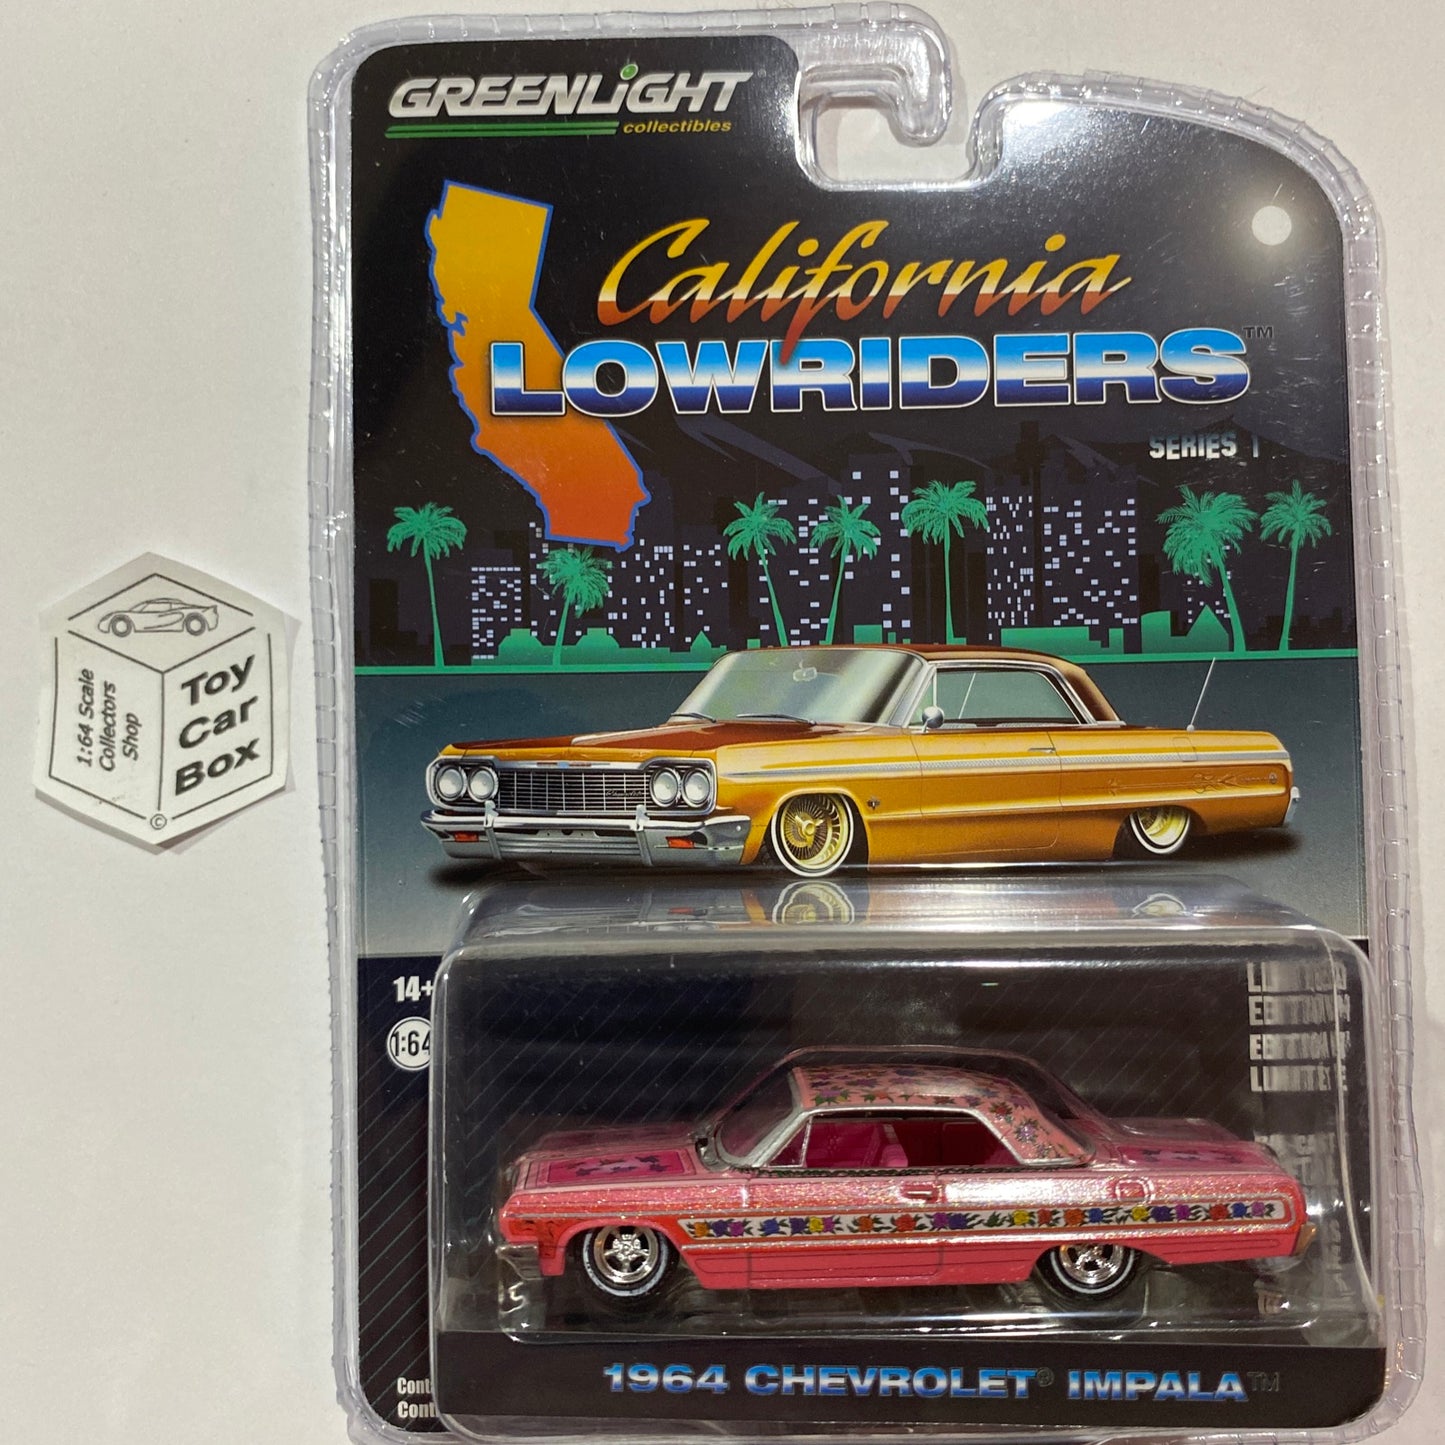 GREENLIGHT - 1964 Chevrolet Impala (Pink - Series 1 California Lowriders) J95